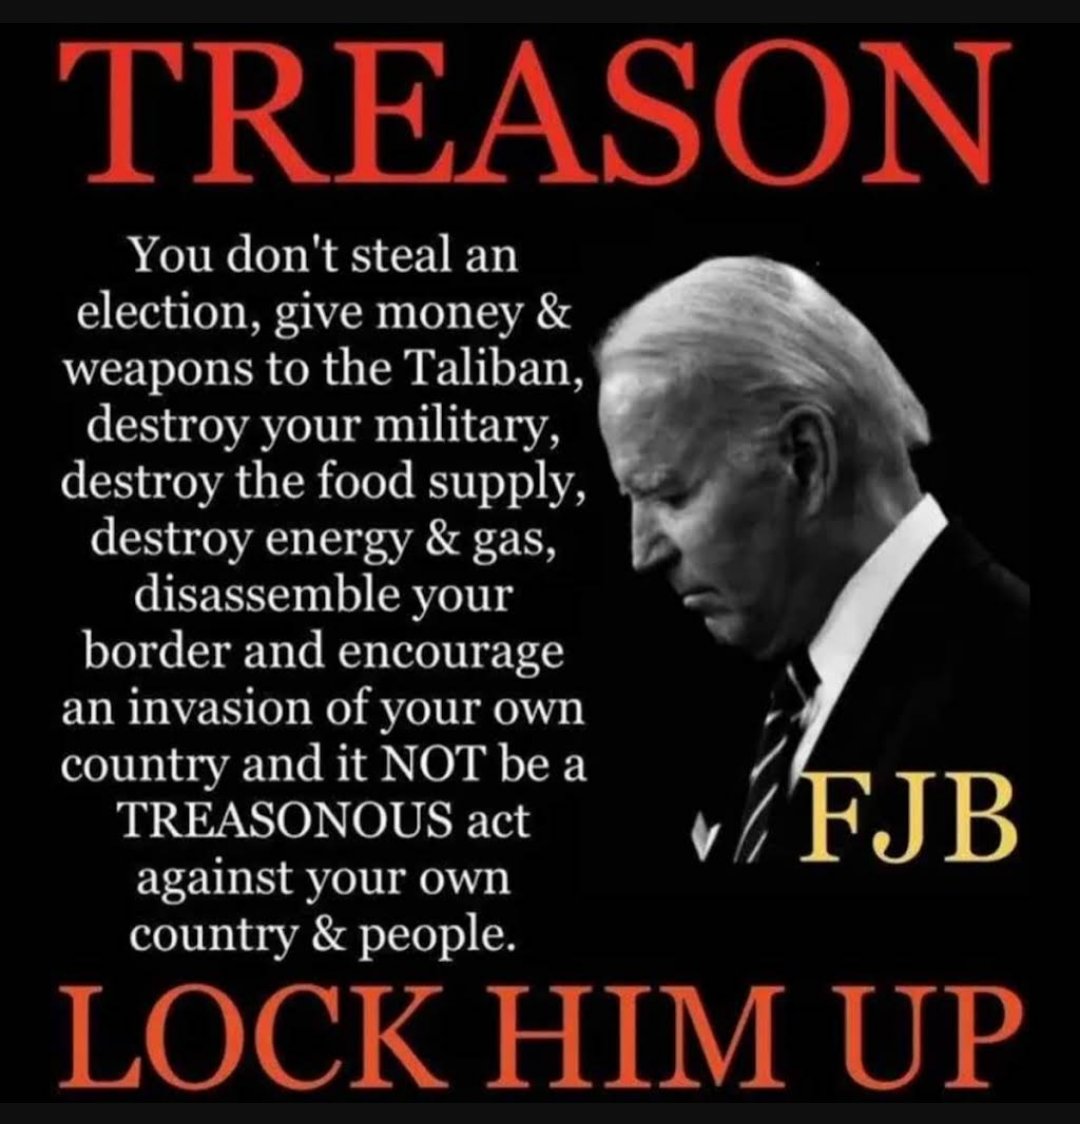 Everyone knows its true.. #Treason #FJB